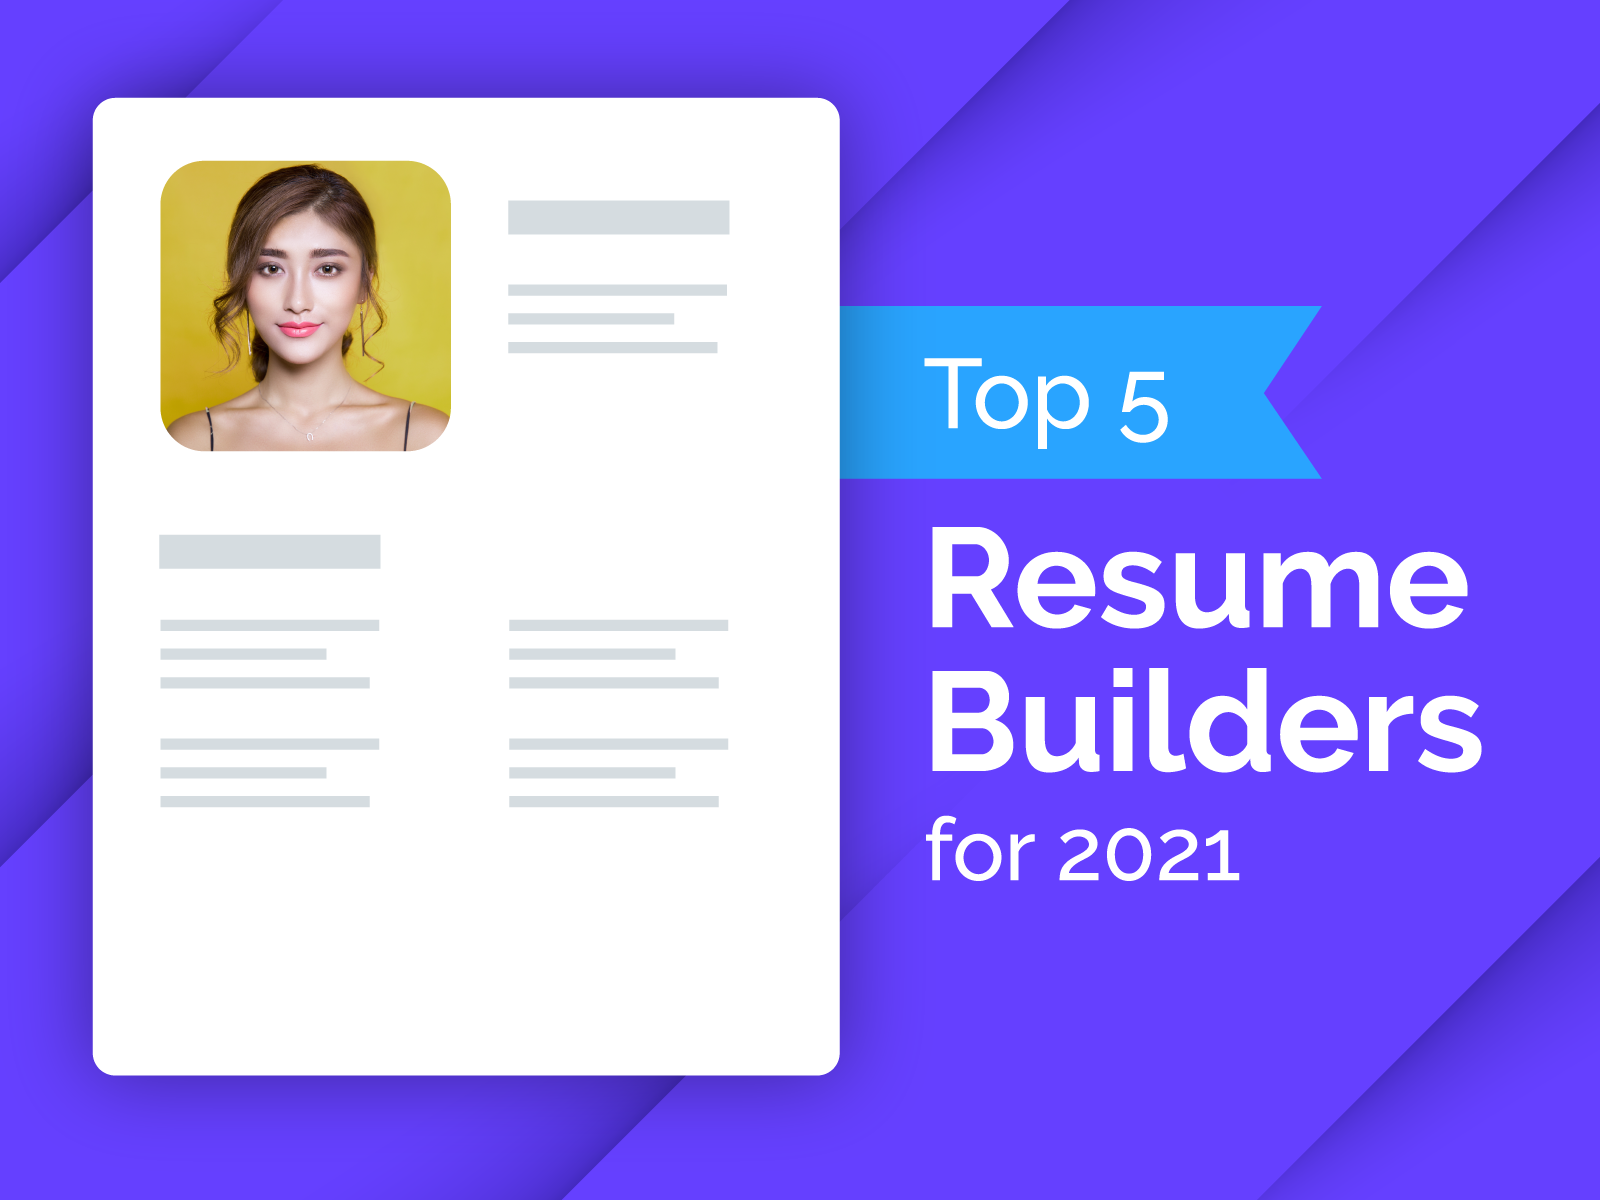 Resume builder tools